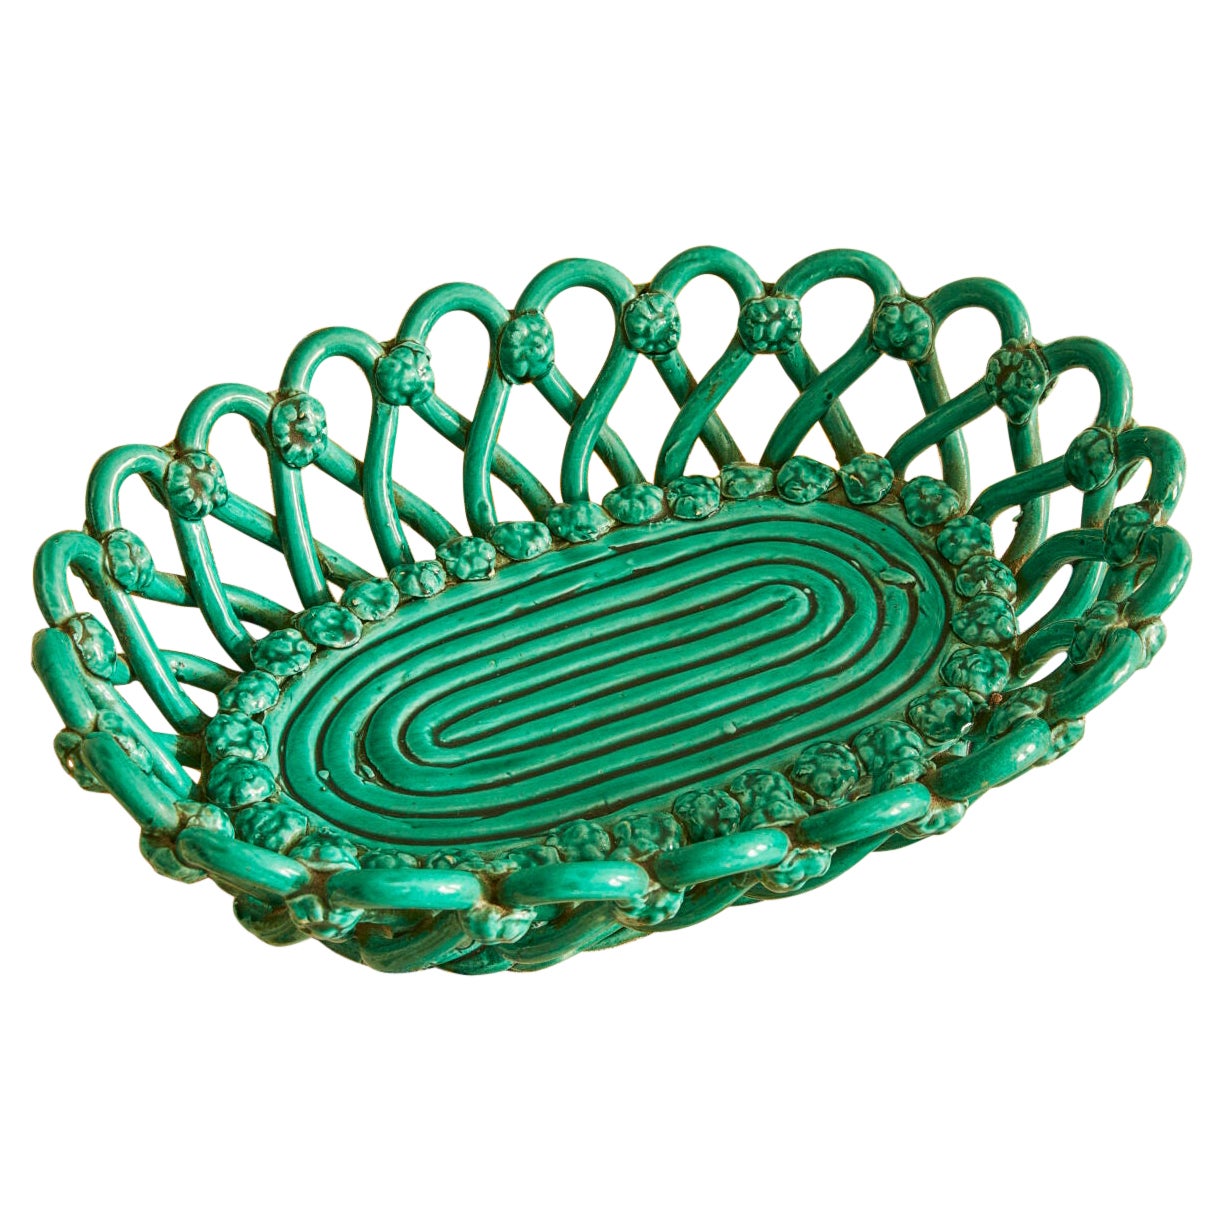 Vintage Vallauris Woven Ceramic Basket in Green Glaze, France, 1940s For Sale